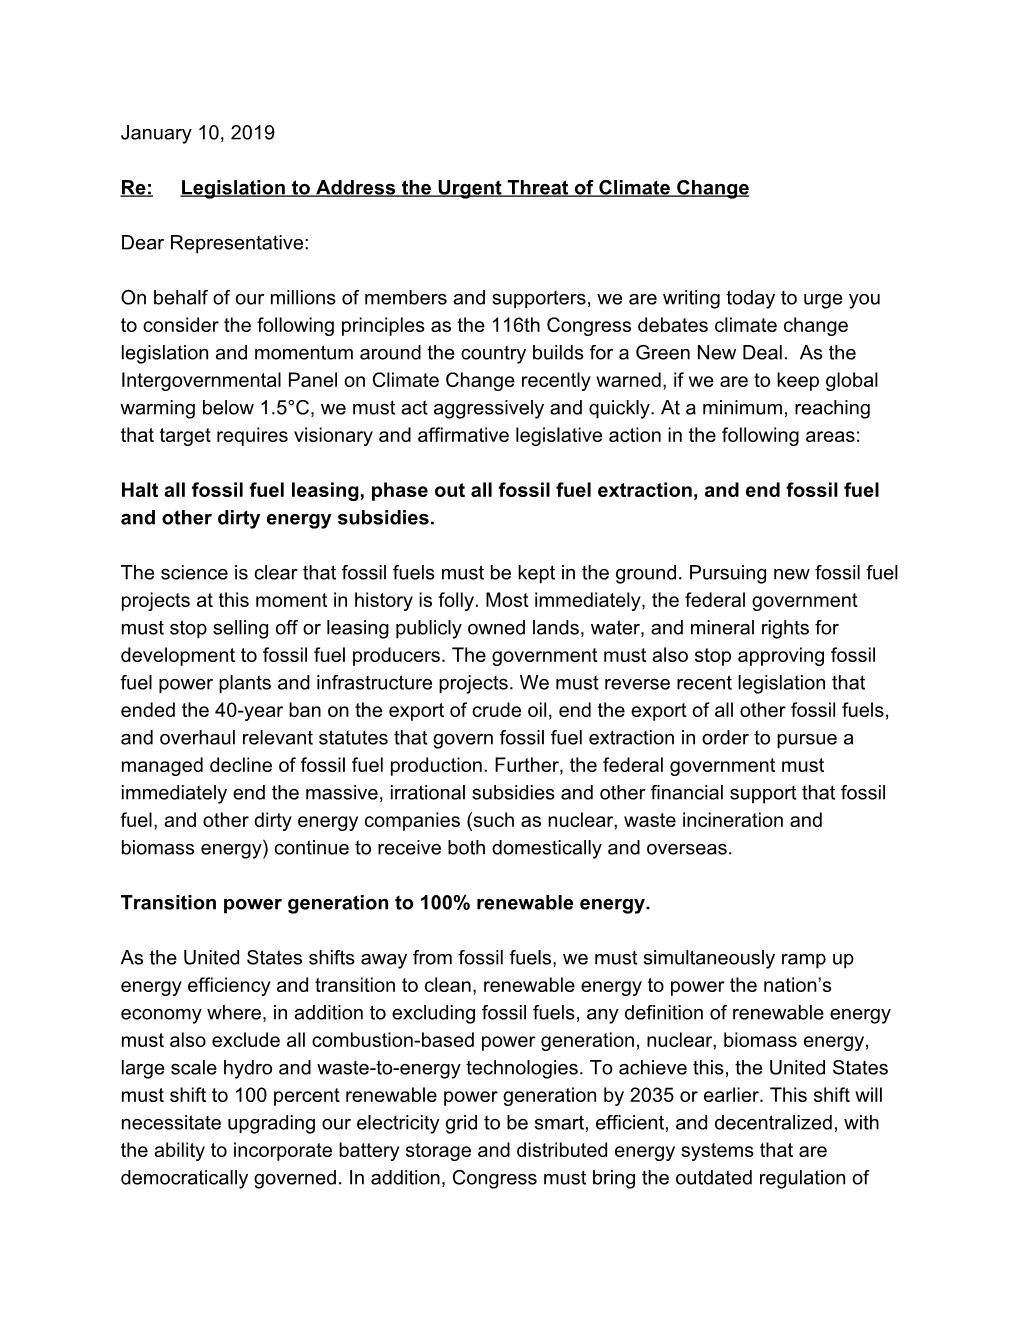 Legislation to Address the Urgent Threat of Climate Change